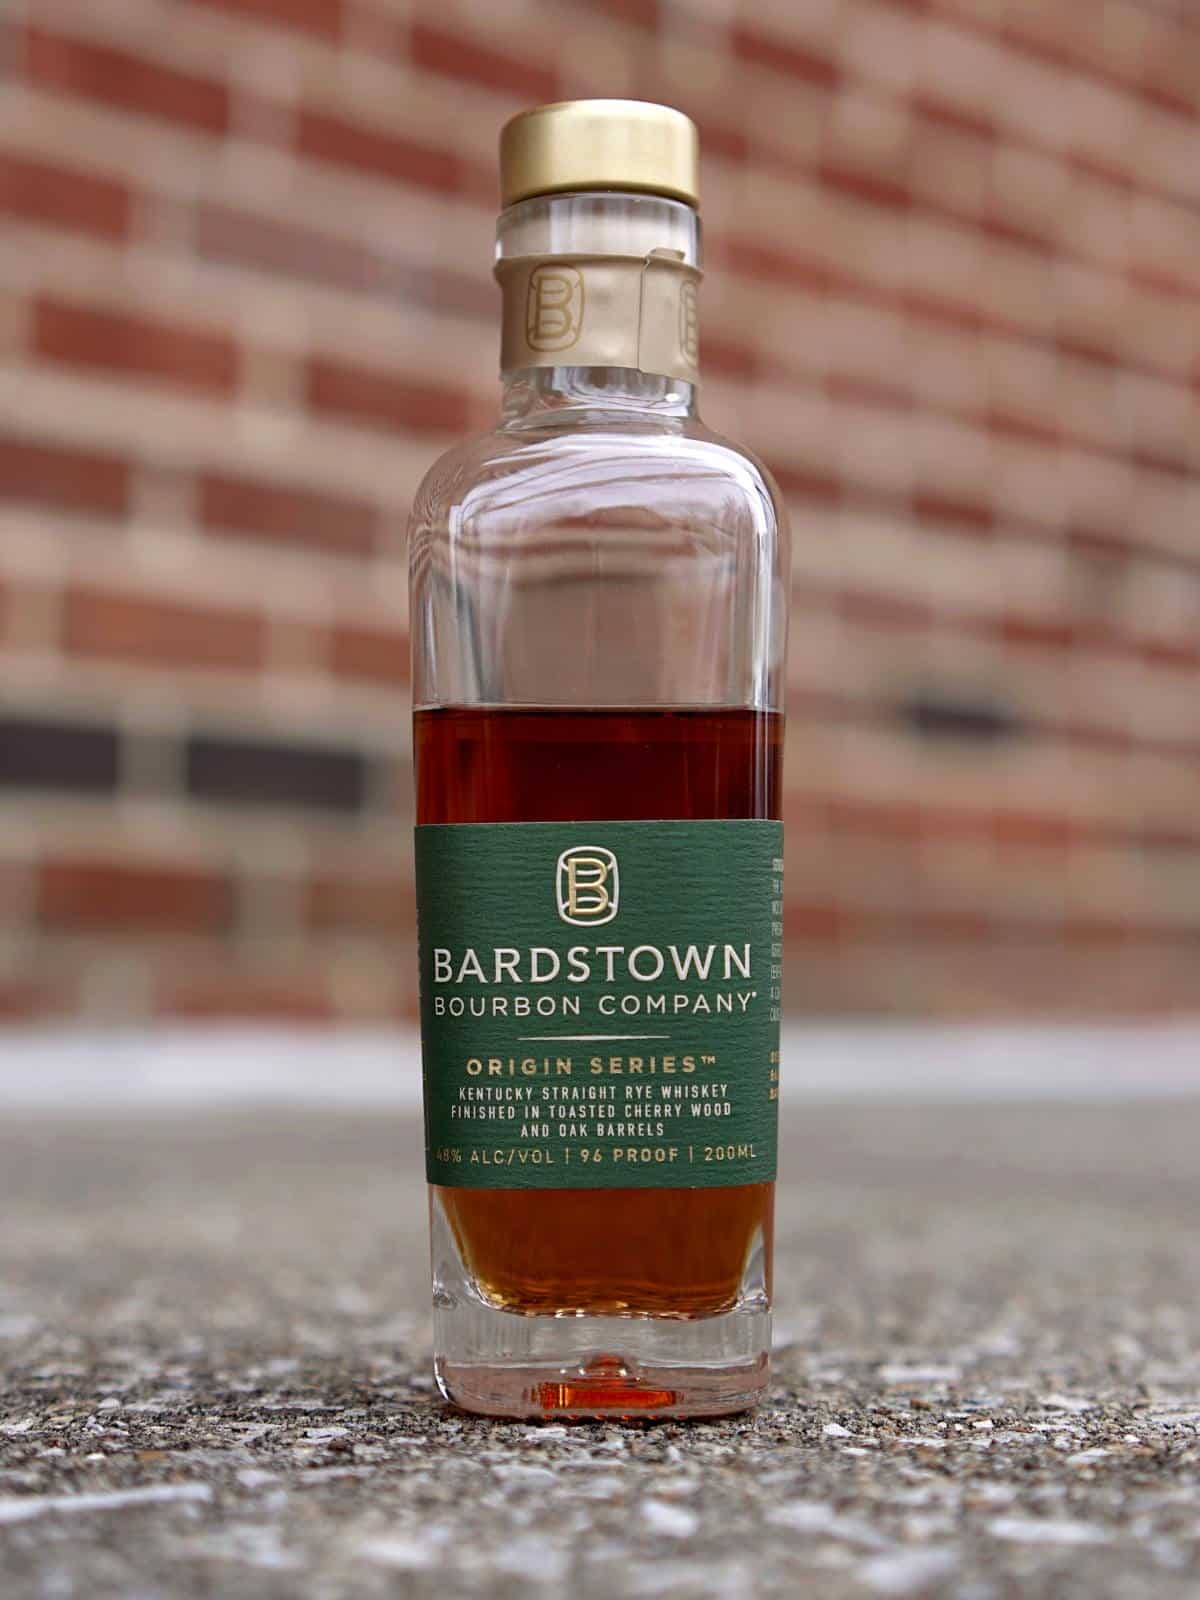 Bardstown Bourbon Company Origin Rye featured